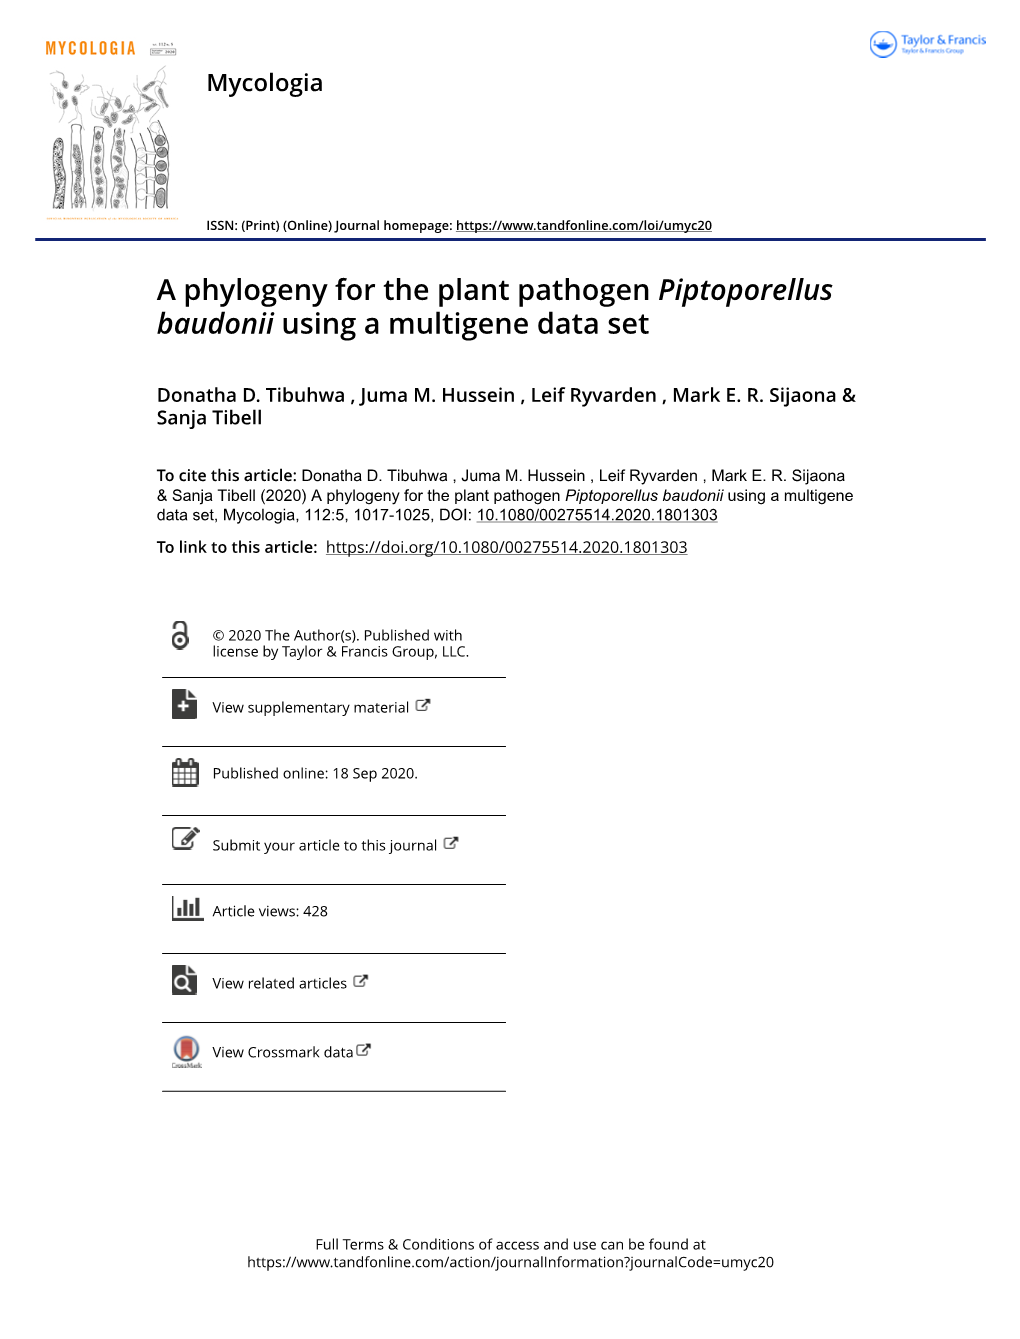 A Phylogeny for the Plant Pathogen Piptoporellus Baudonii Using a Multigene Data Set